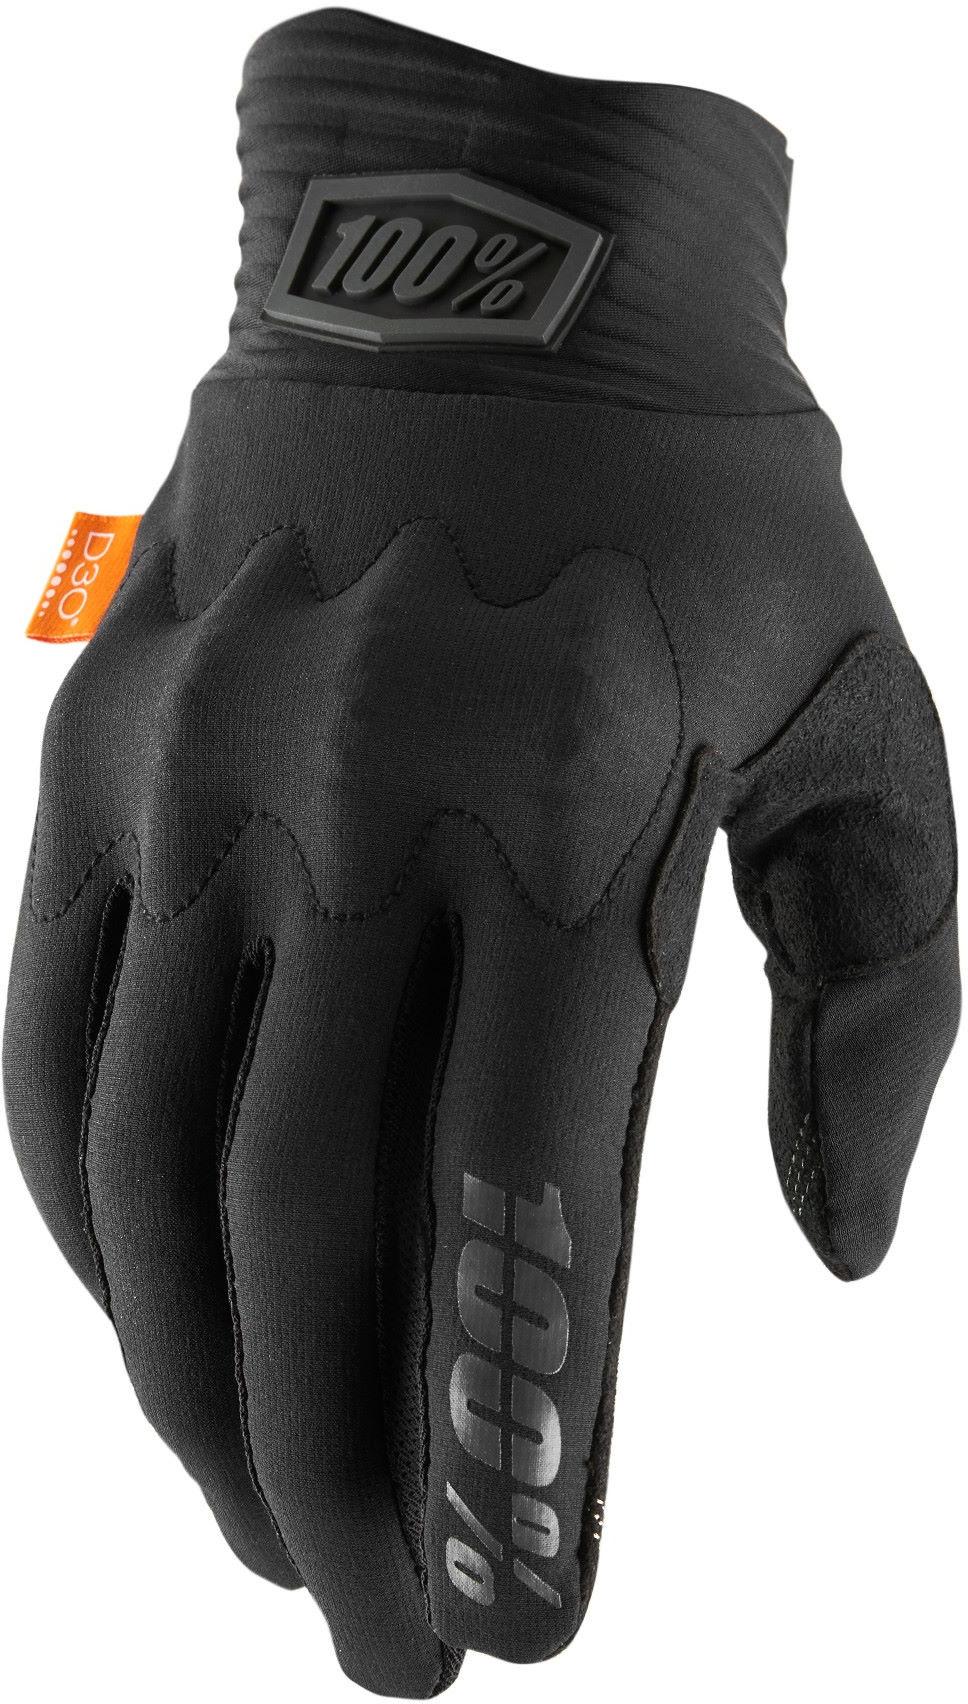 100% Brisker Gloves - Black-grey - Xxl  Black-grey